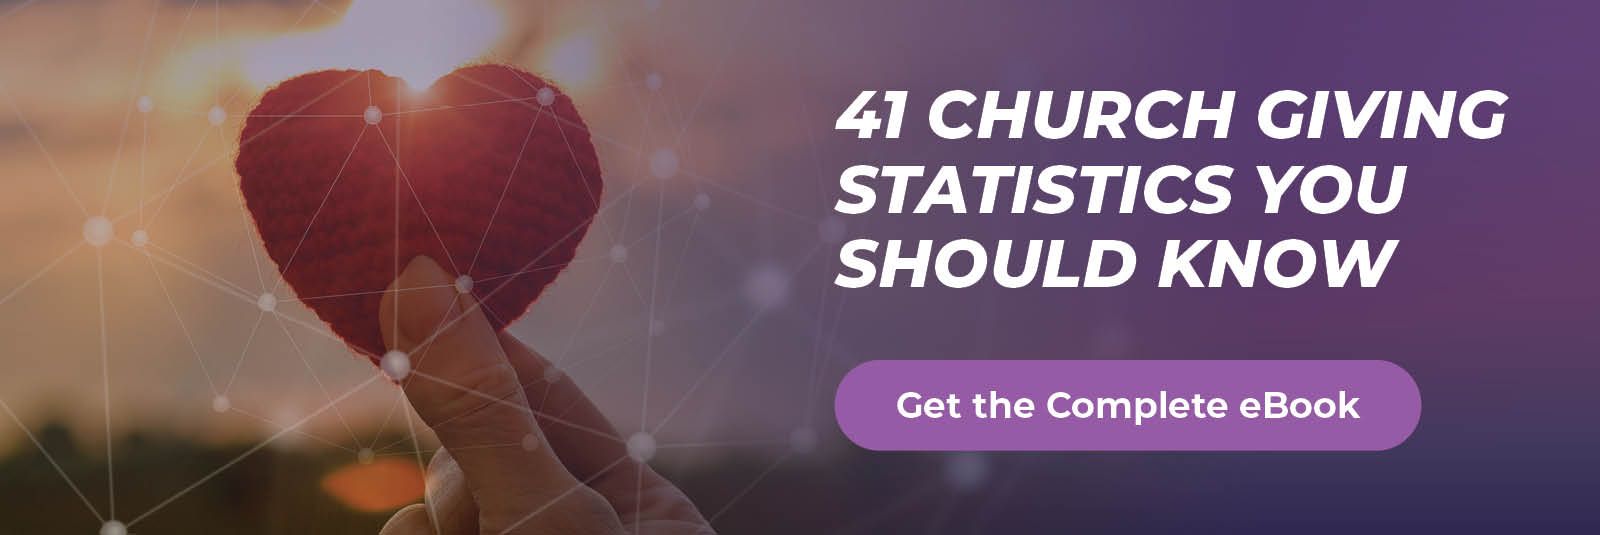 41-Church-Giving-Stats-LP-Header-0420